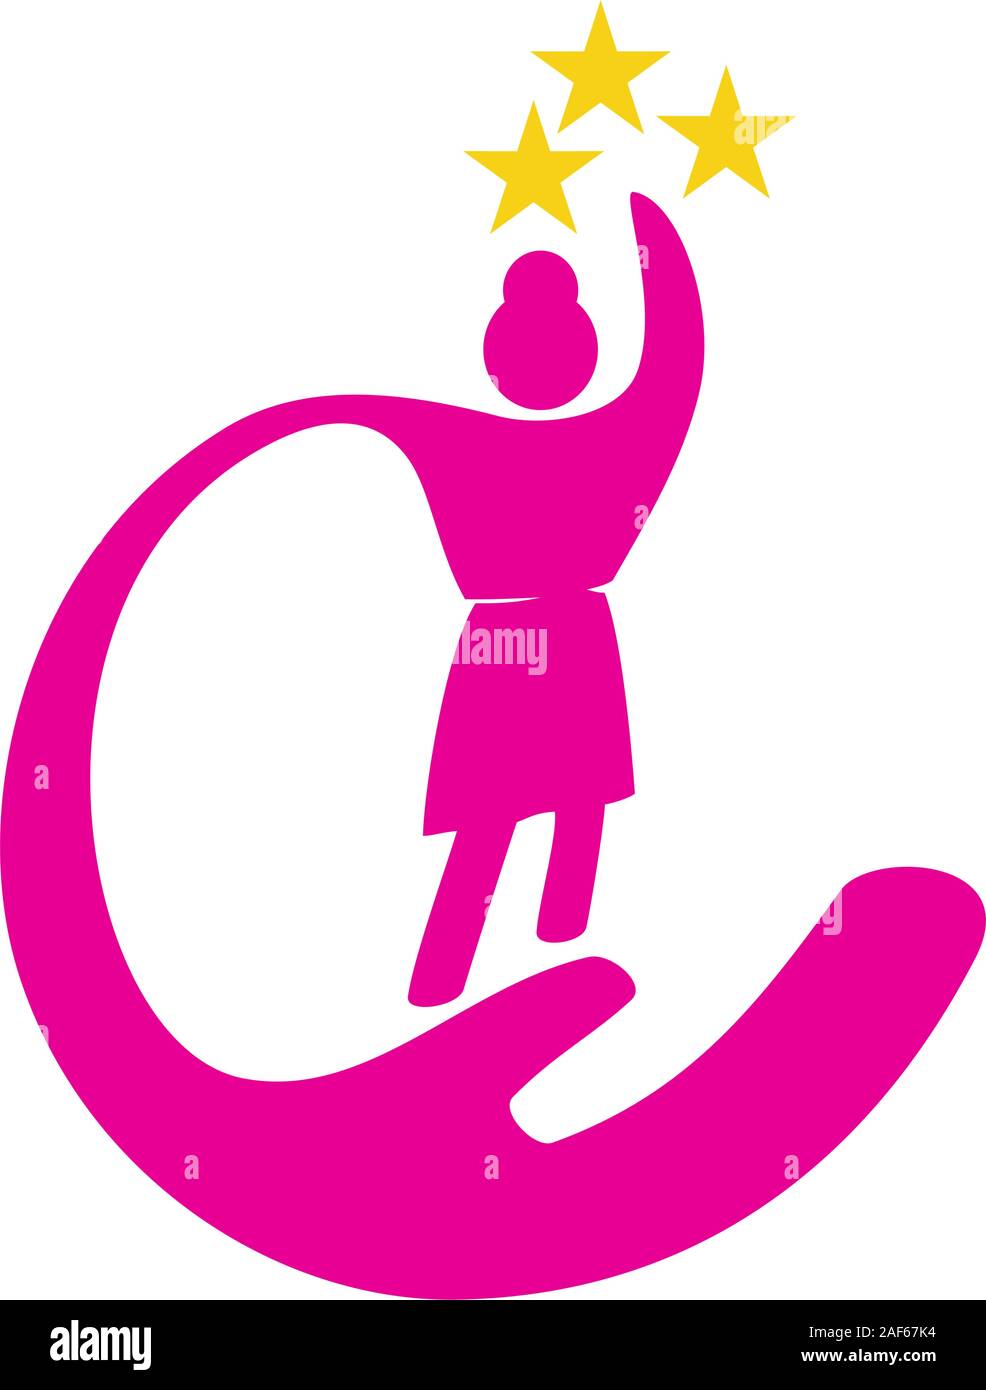 Woman power international logo icon symbol Vector Image